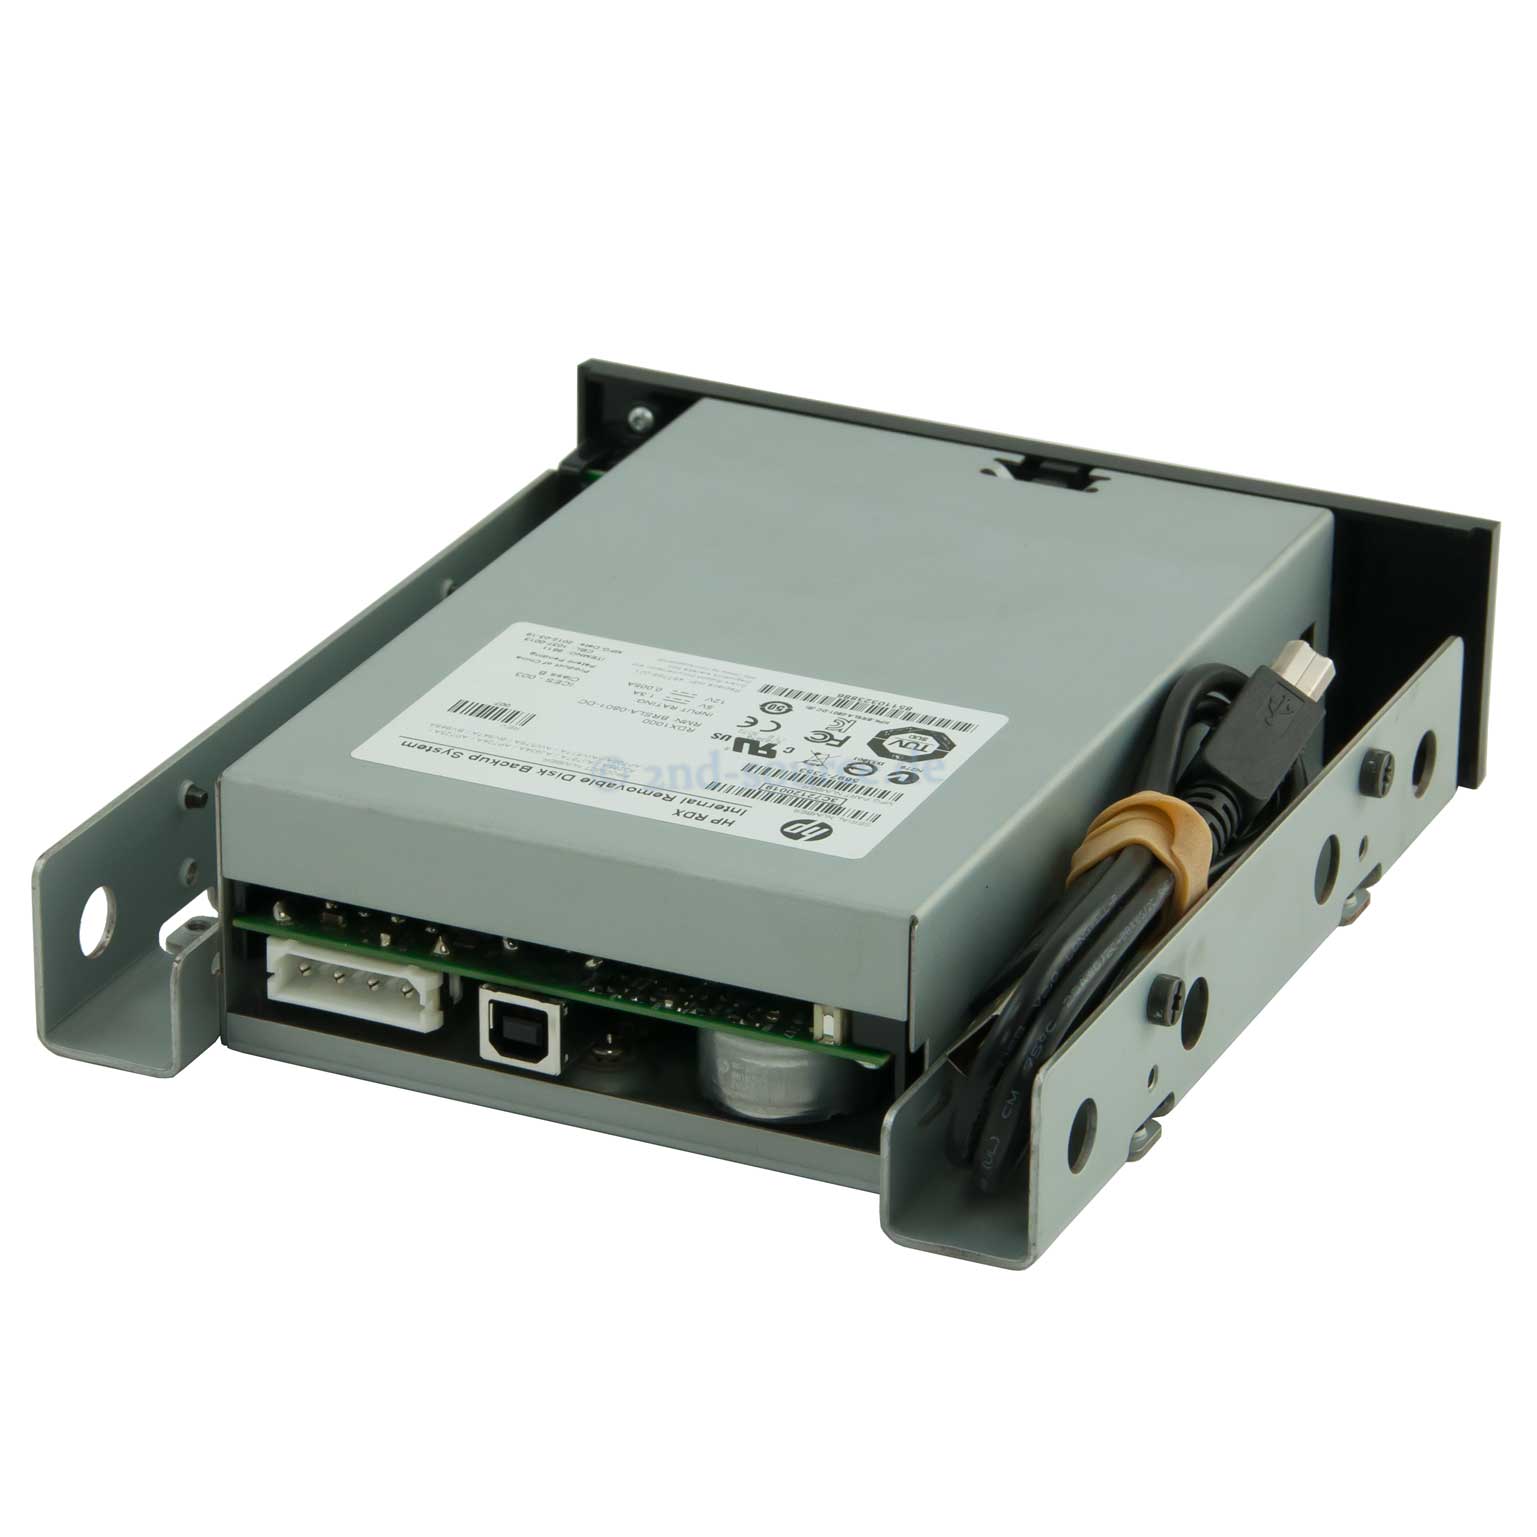 HPE RDX1000 Internal Removable Disk Backup System BV847A 487768-001